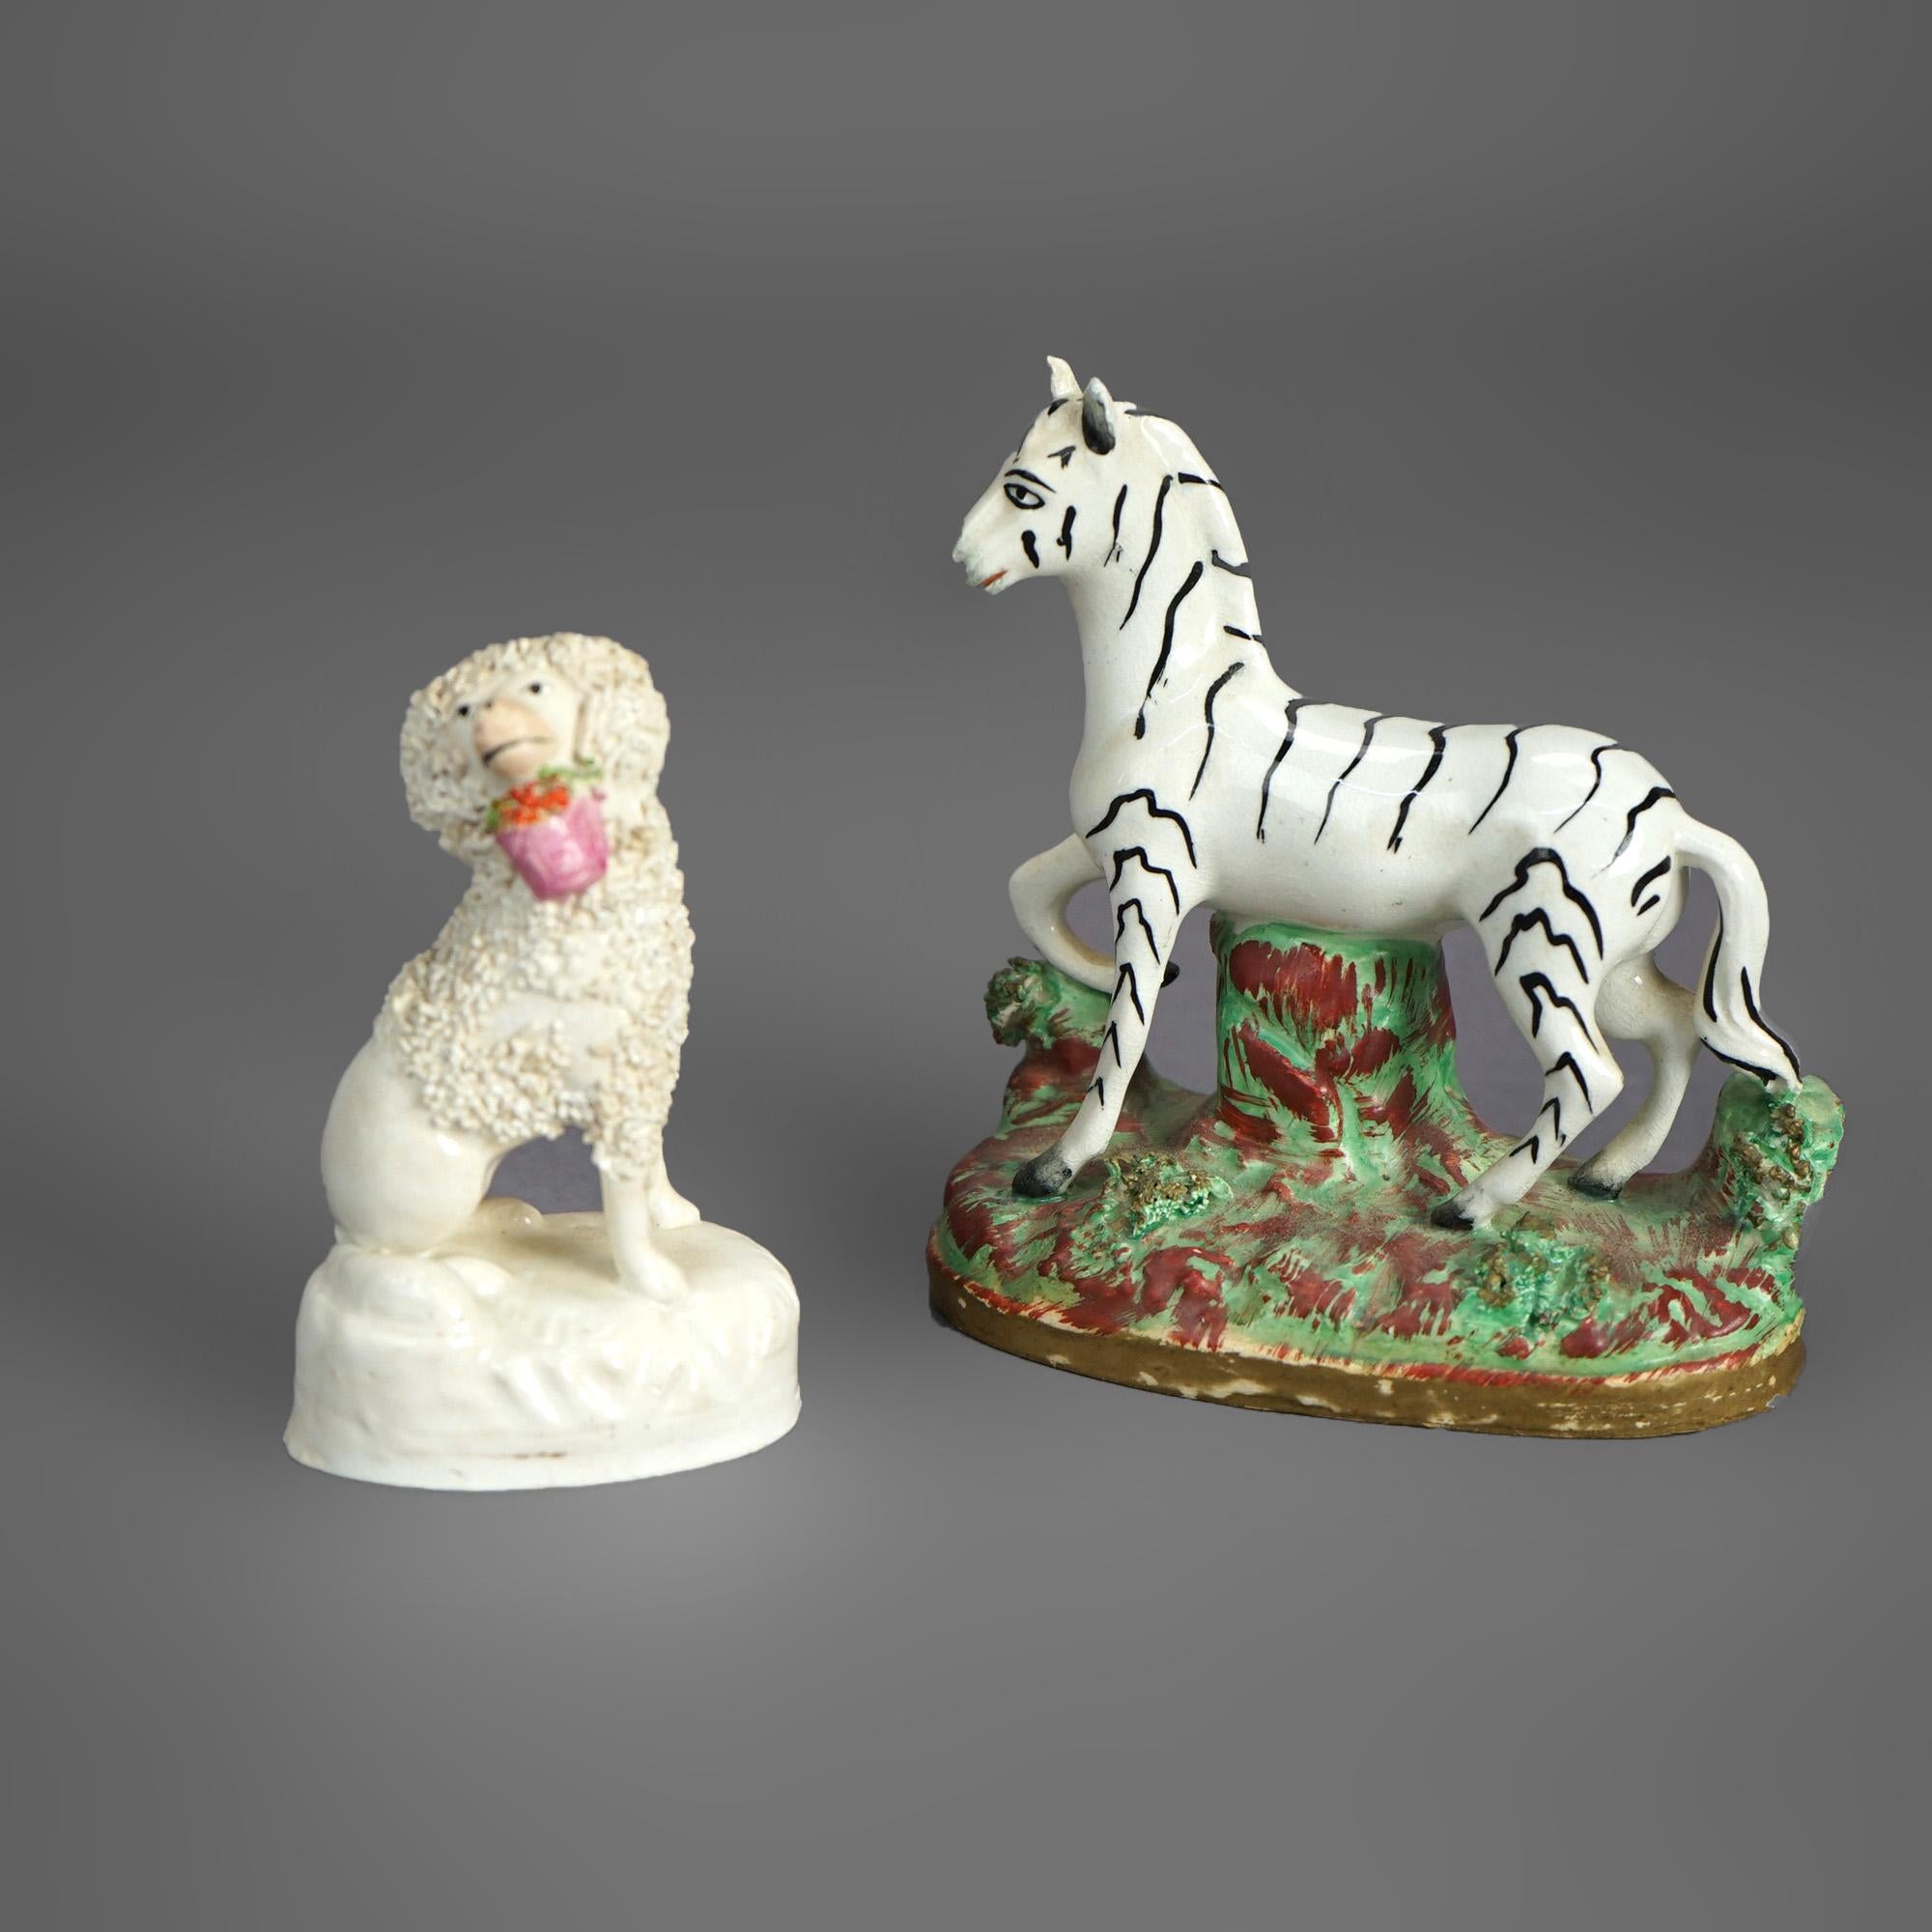 Antike Staffordshire Polychromed Porzellan Zebra & Pudel Hund Figuren C1870

Maße - Zebra: 5''H x 4,75''L x 2,5''D; Hund: 4''H x 2,5''L x 2''D